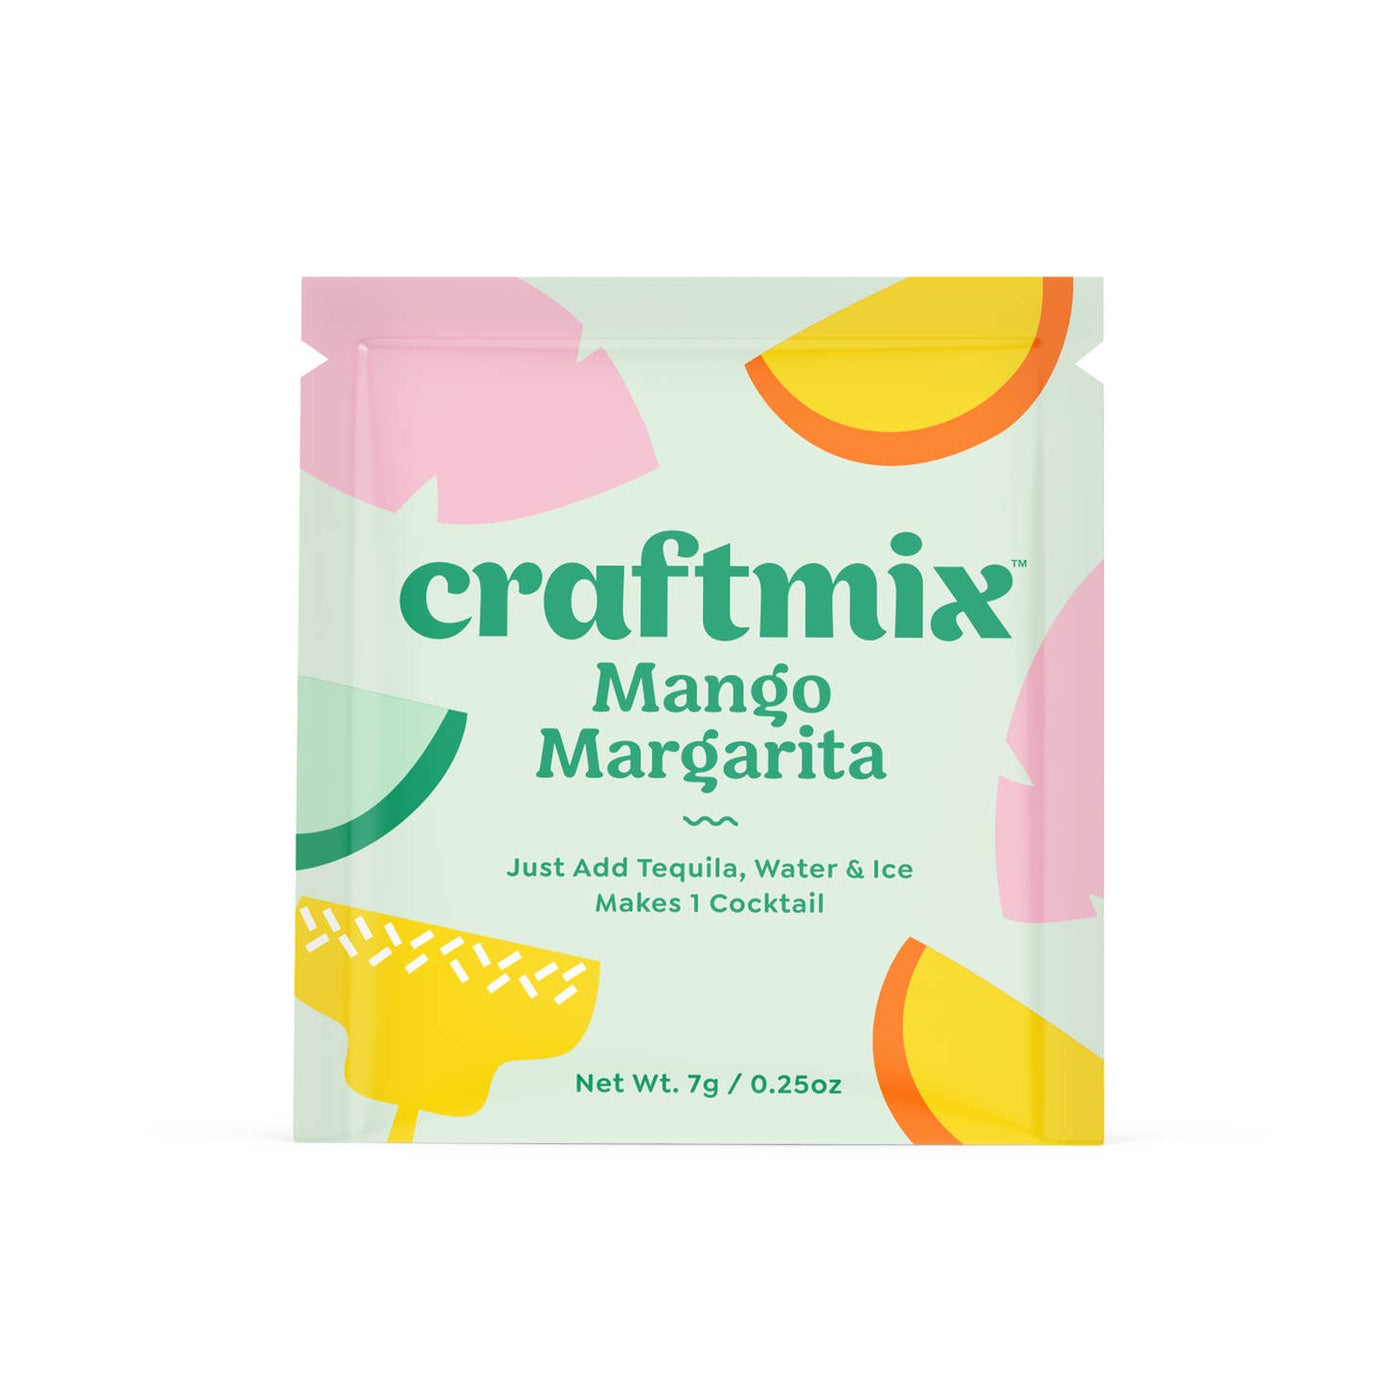 Craft-Mix Mocktail Drink Mixer Packets